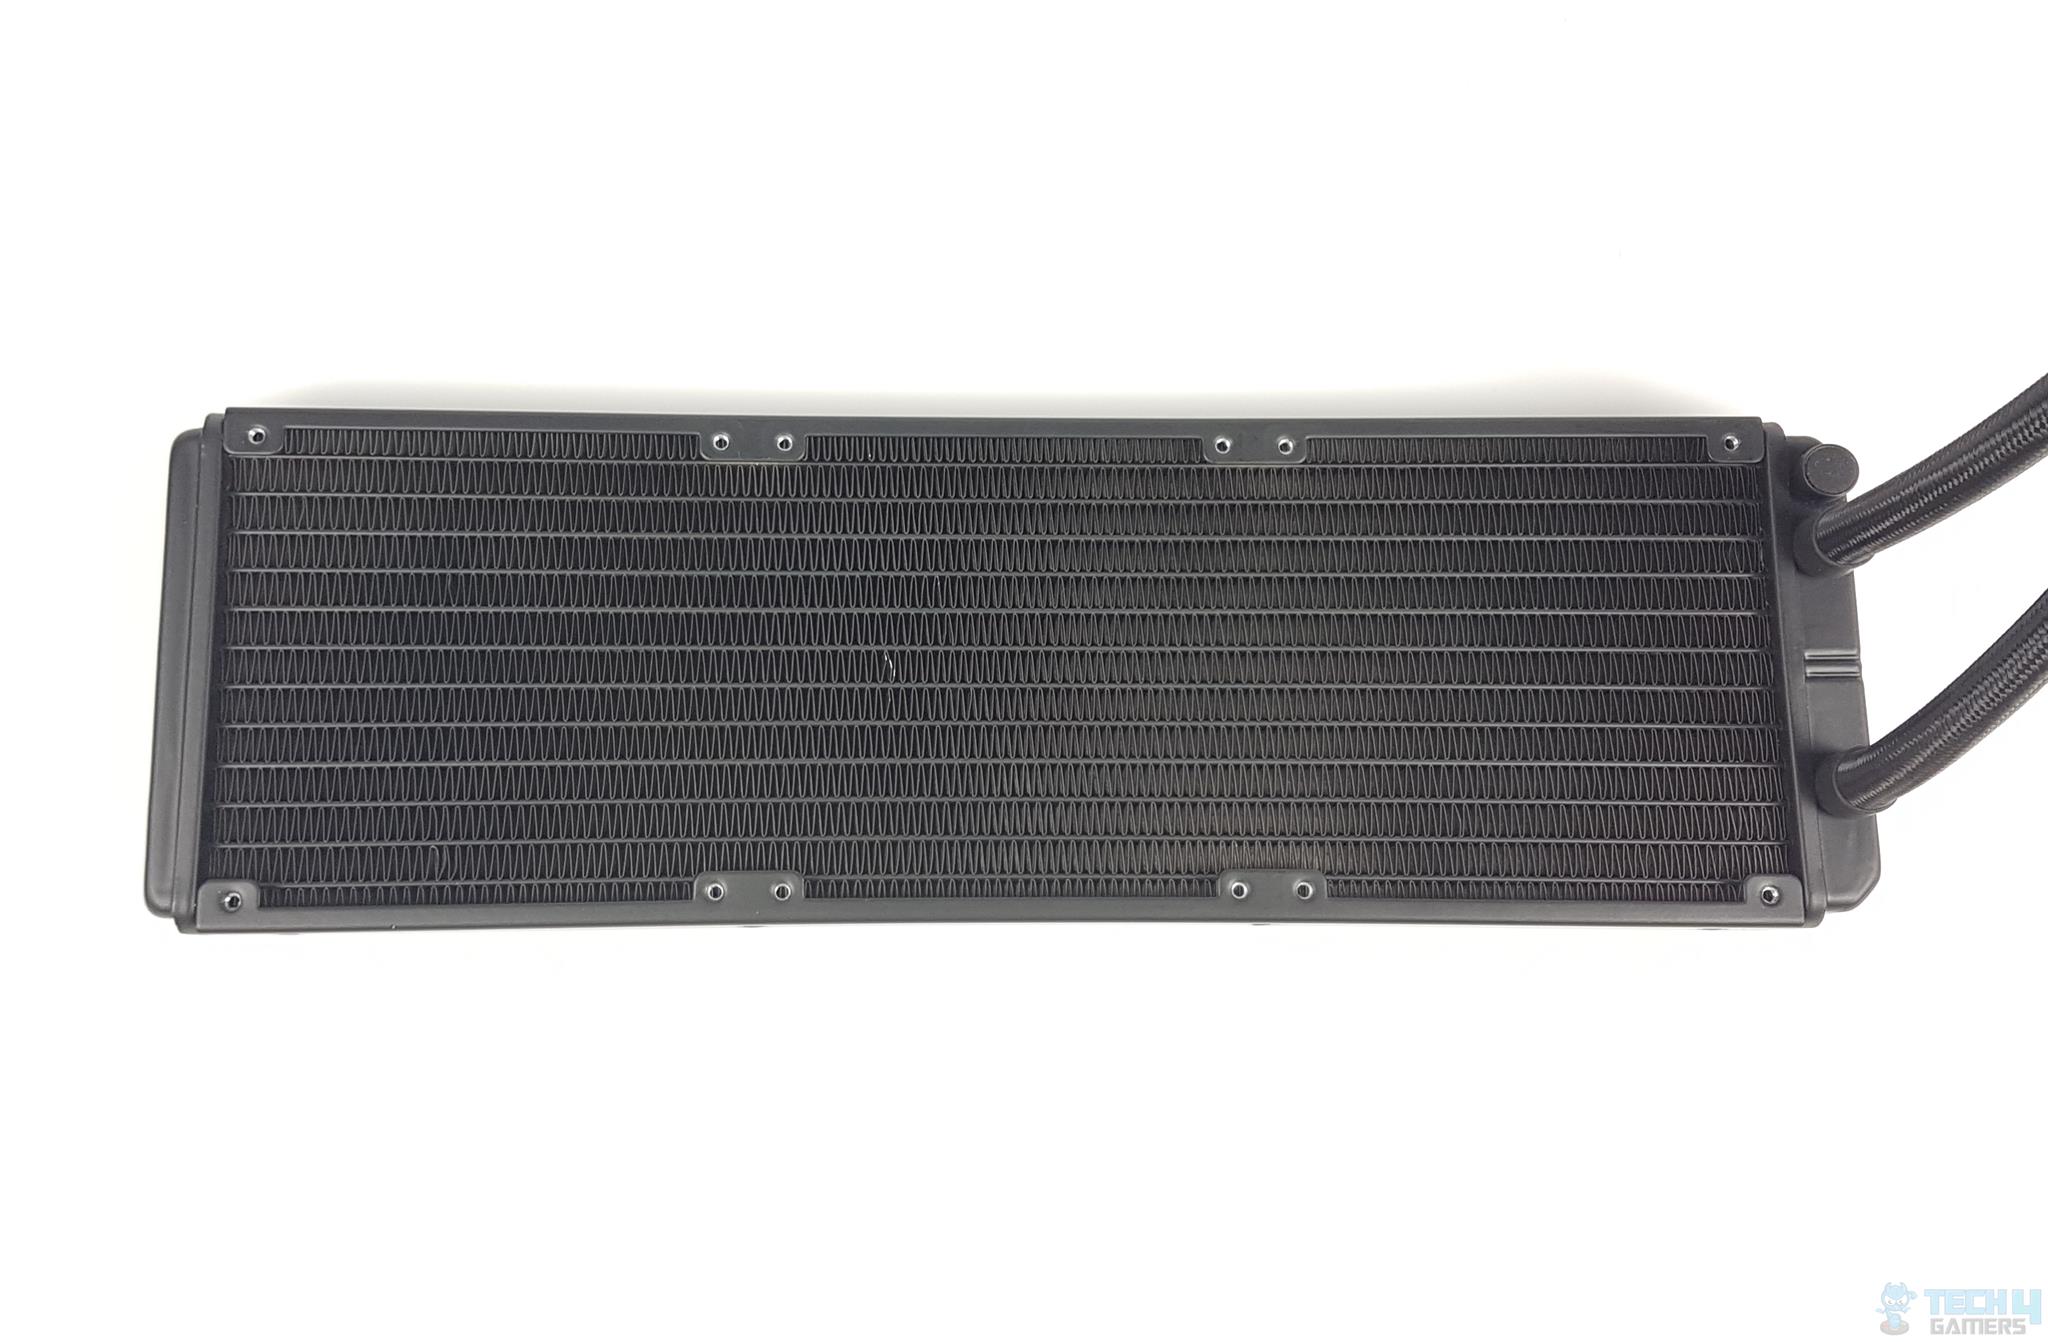 SilverStone iCEGEM 360 Liquid Cooler — The radiator